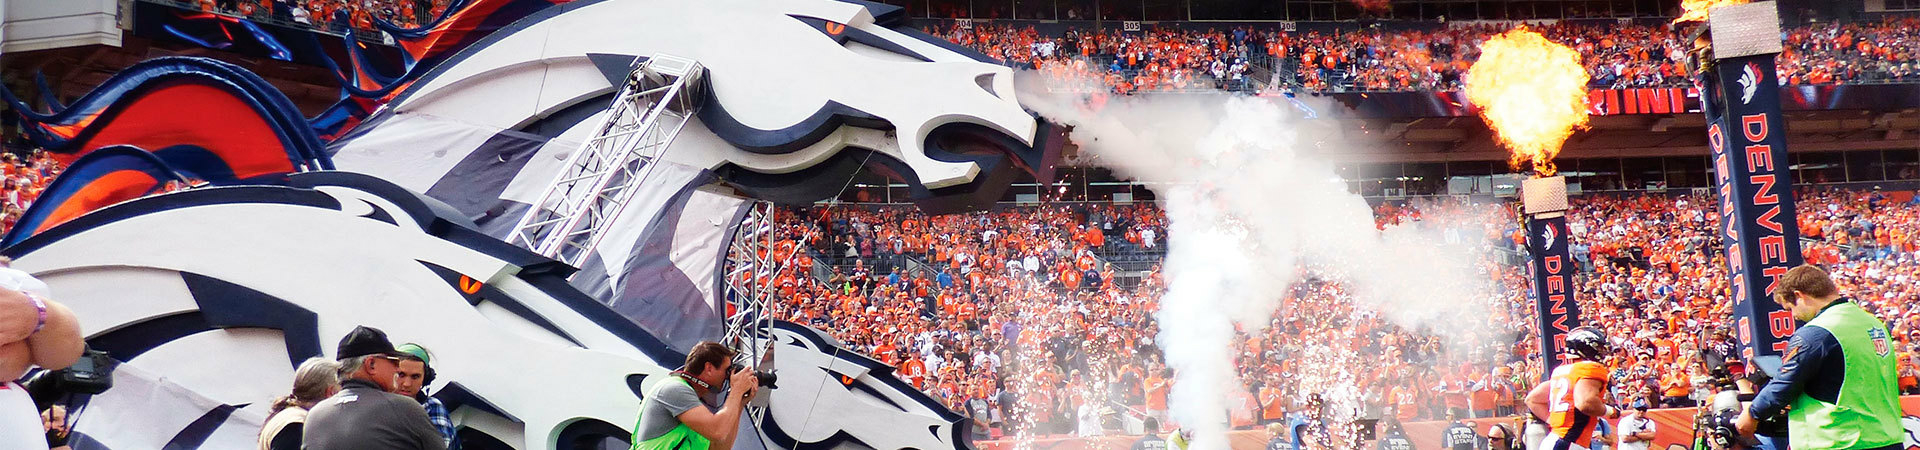 Large foam sculptures of the Denver Broncos logos for player entrances at the stadium.